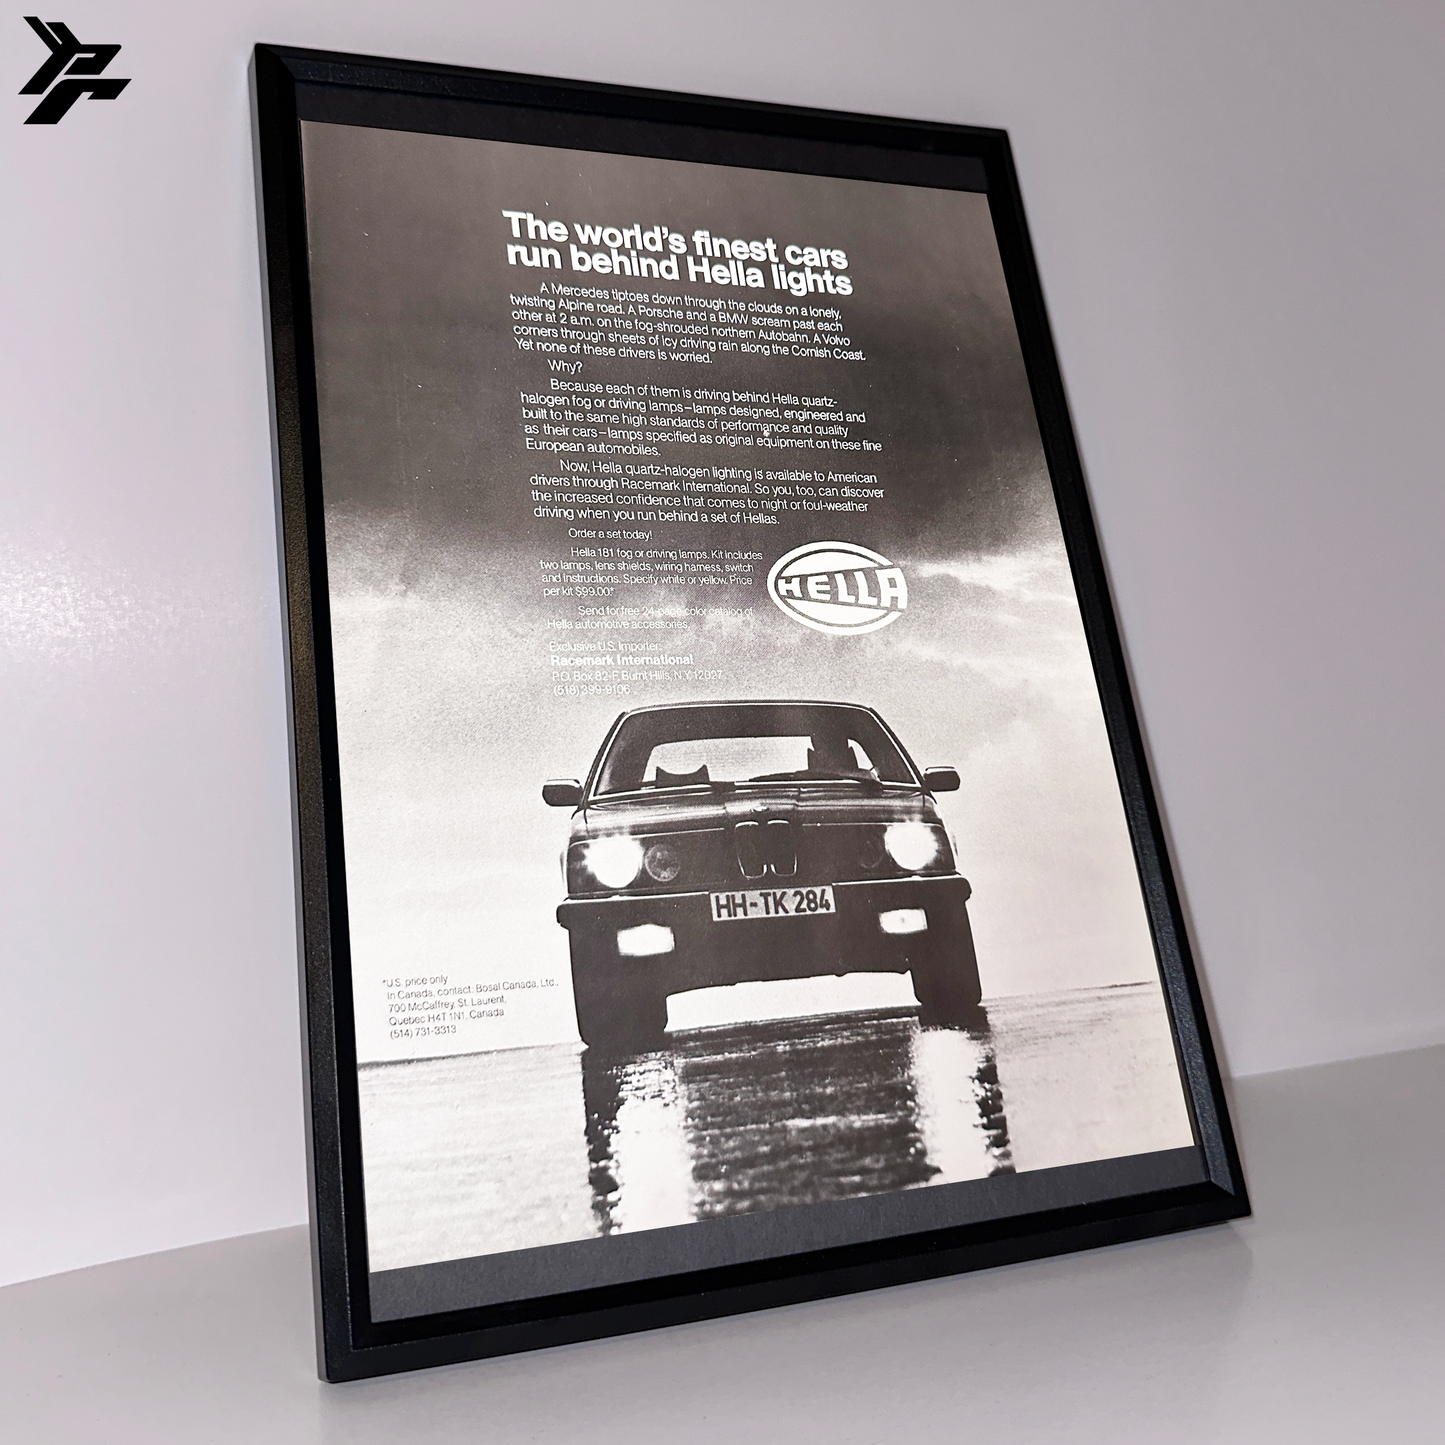 Bmw e21 Hella finest cars framed ad